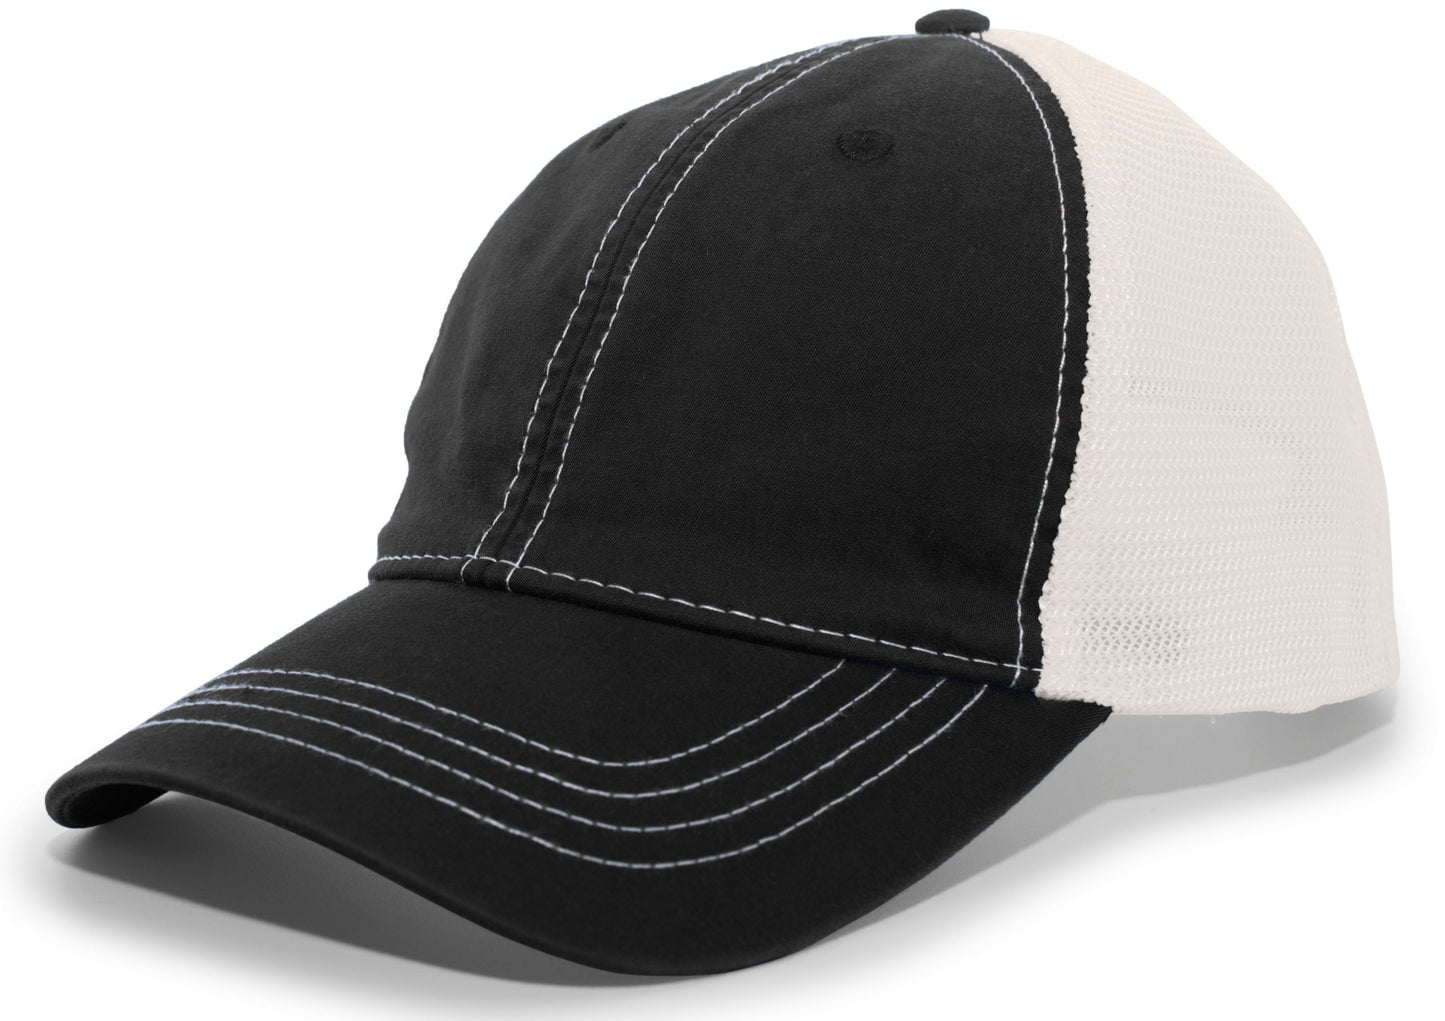 PACIFIC HEADWEAR - VINTAGE TRUCKER SNAPBACK CAP